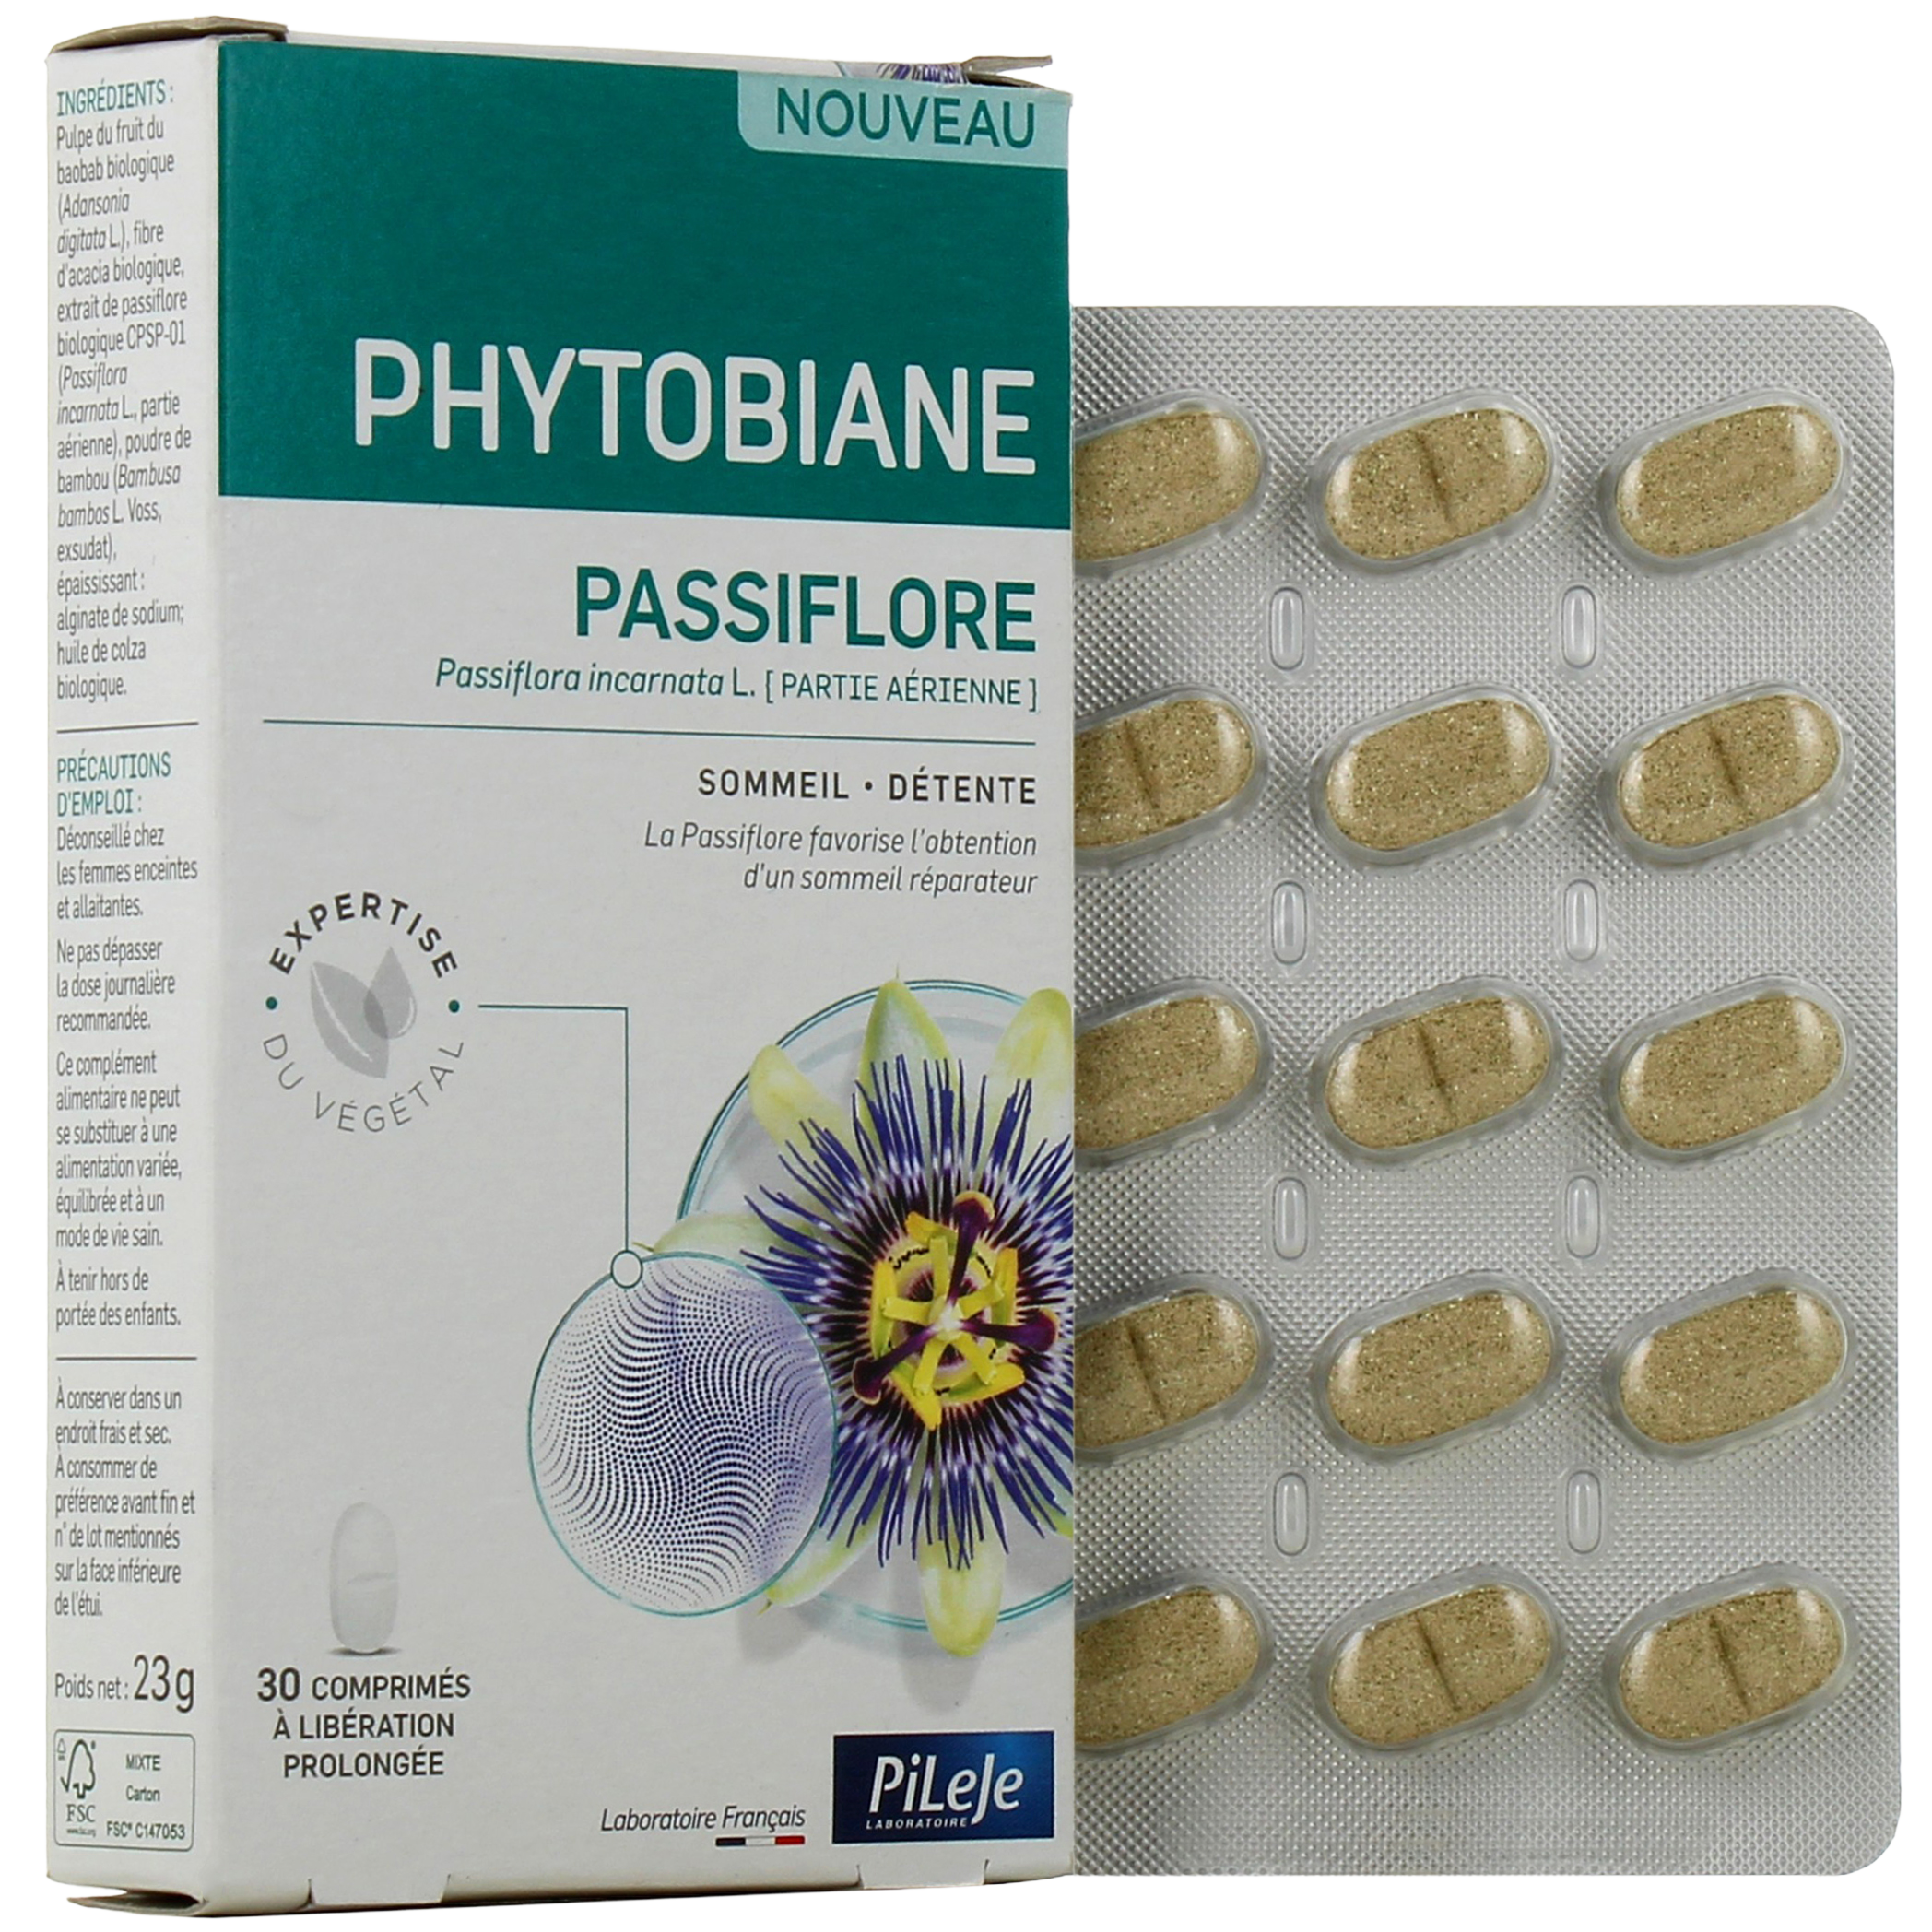 https://cdn.pharmaciedesdrakkars.com/media/images/products/phytobiane-passiflore-phytobiane4-1694072479.jpg